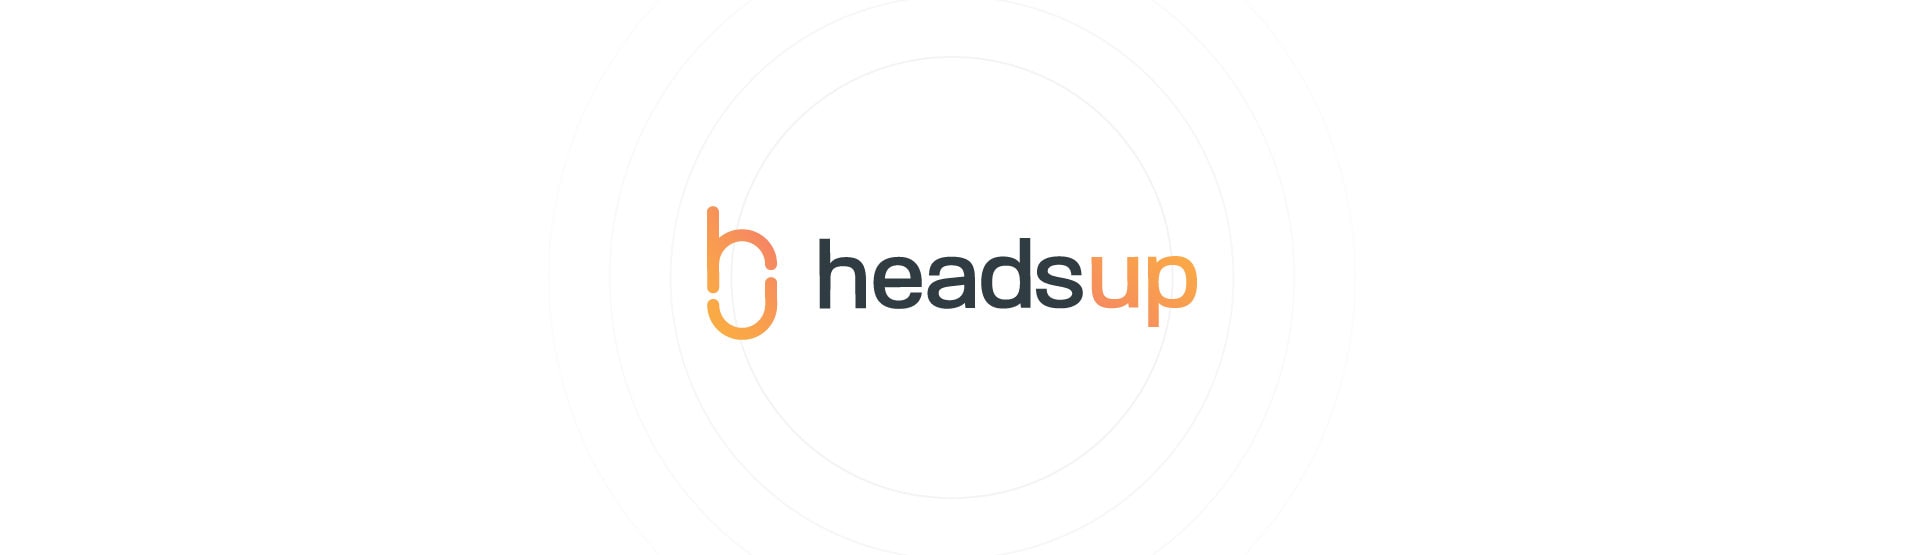 Headsup logo